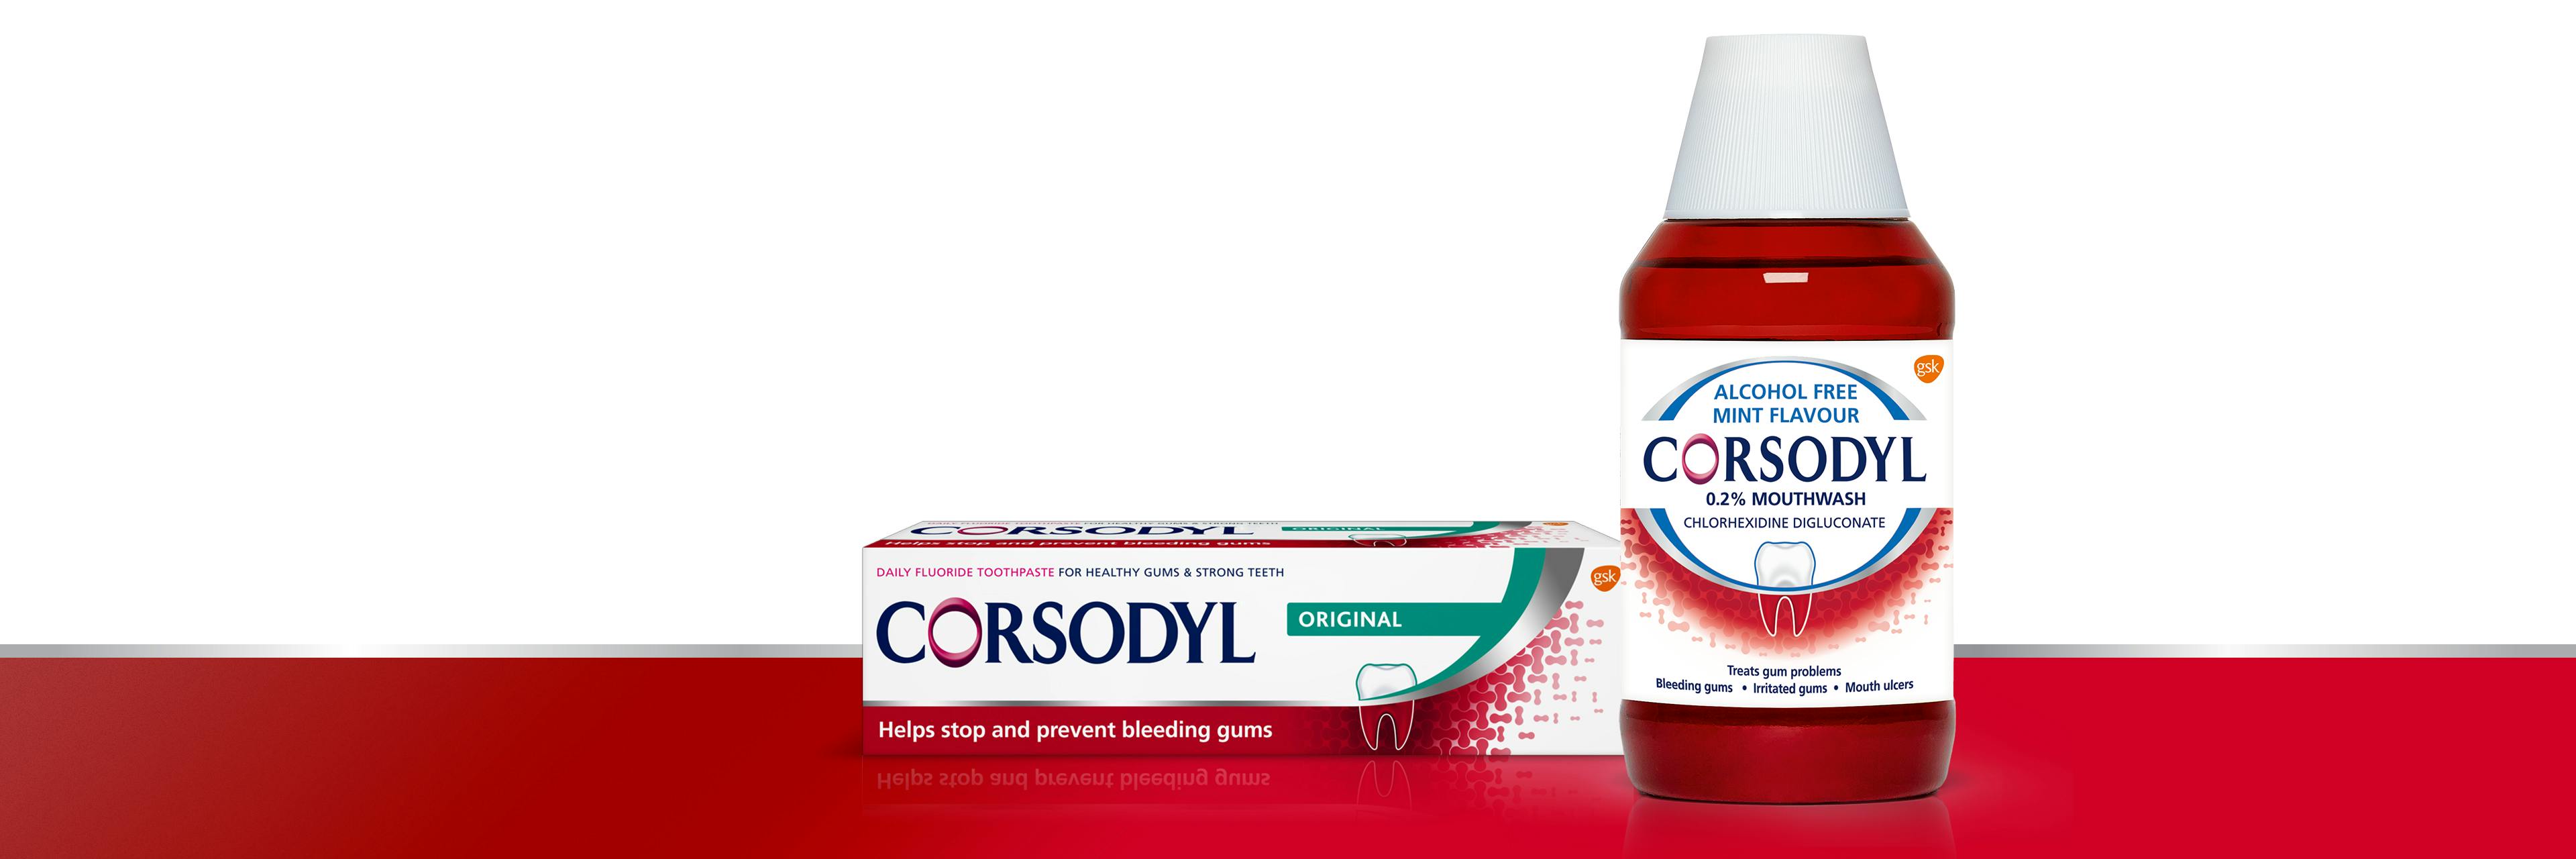 Corsodyl Toothpaste and Corsodyl Mouthwash